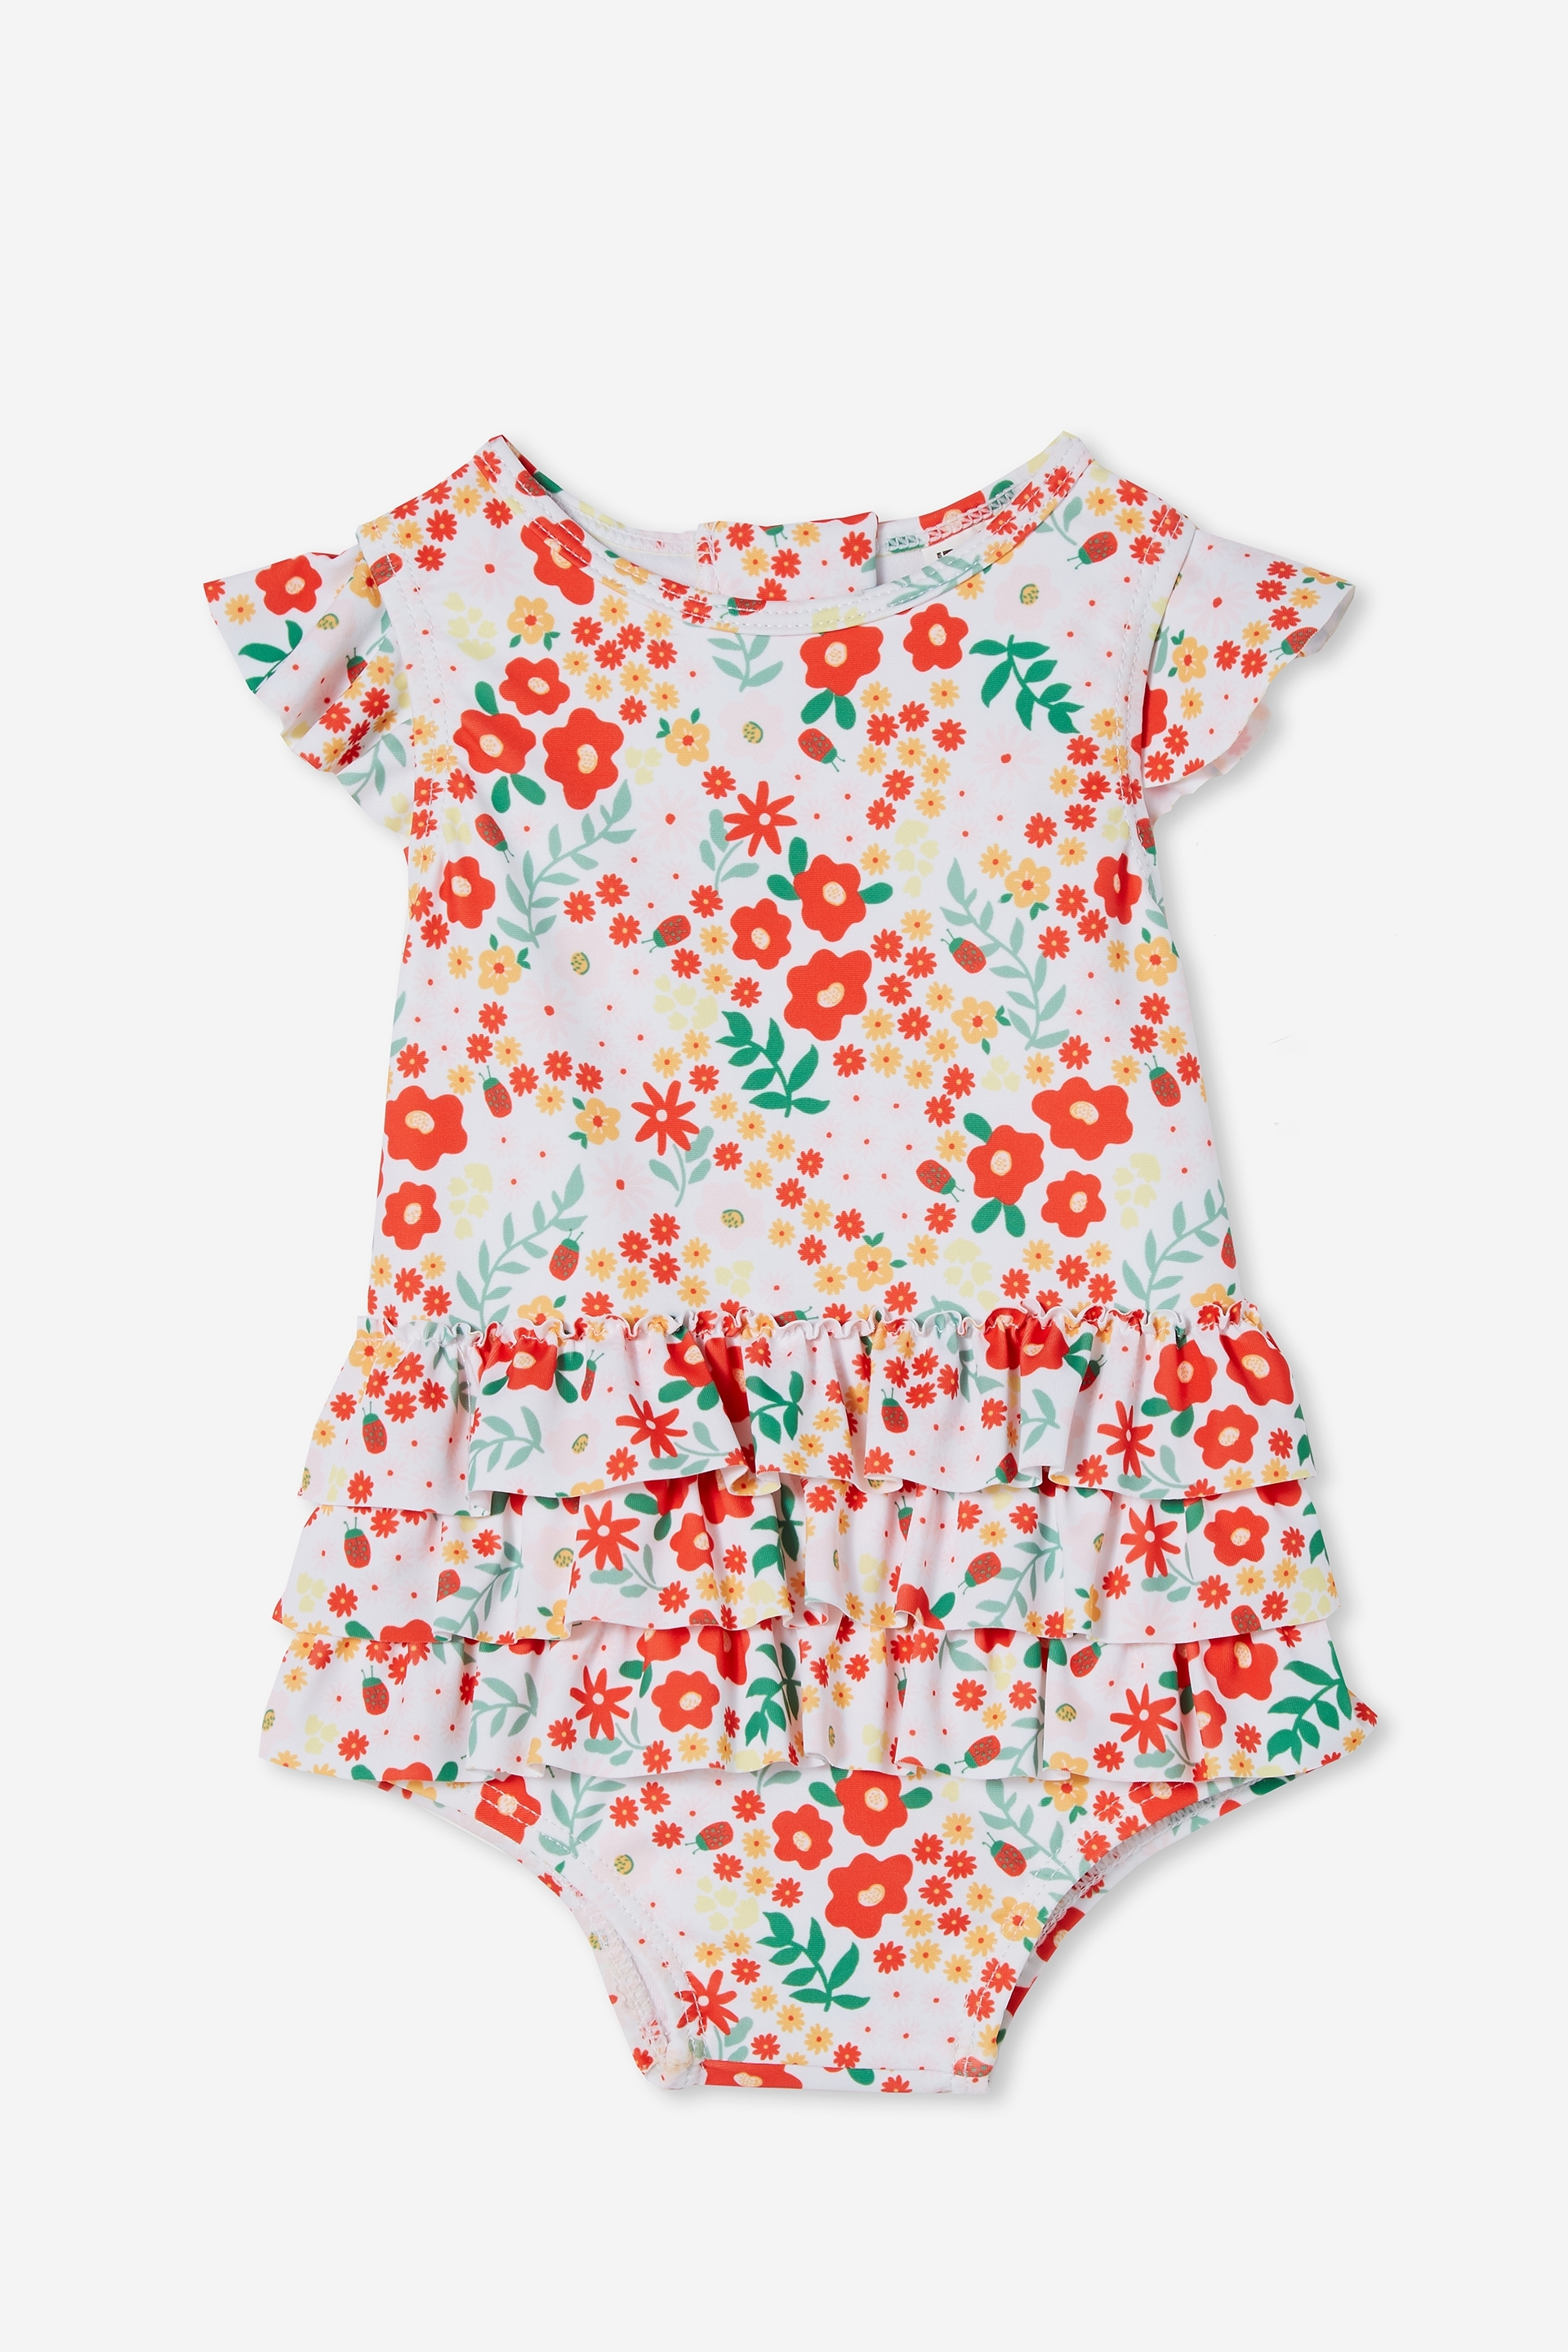 Cotton On Kids - Charlene Ruffle Swimsuit - Vanilla/red orange lulu floral